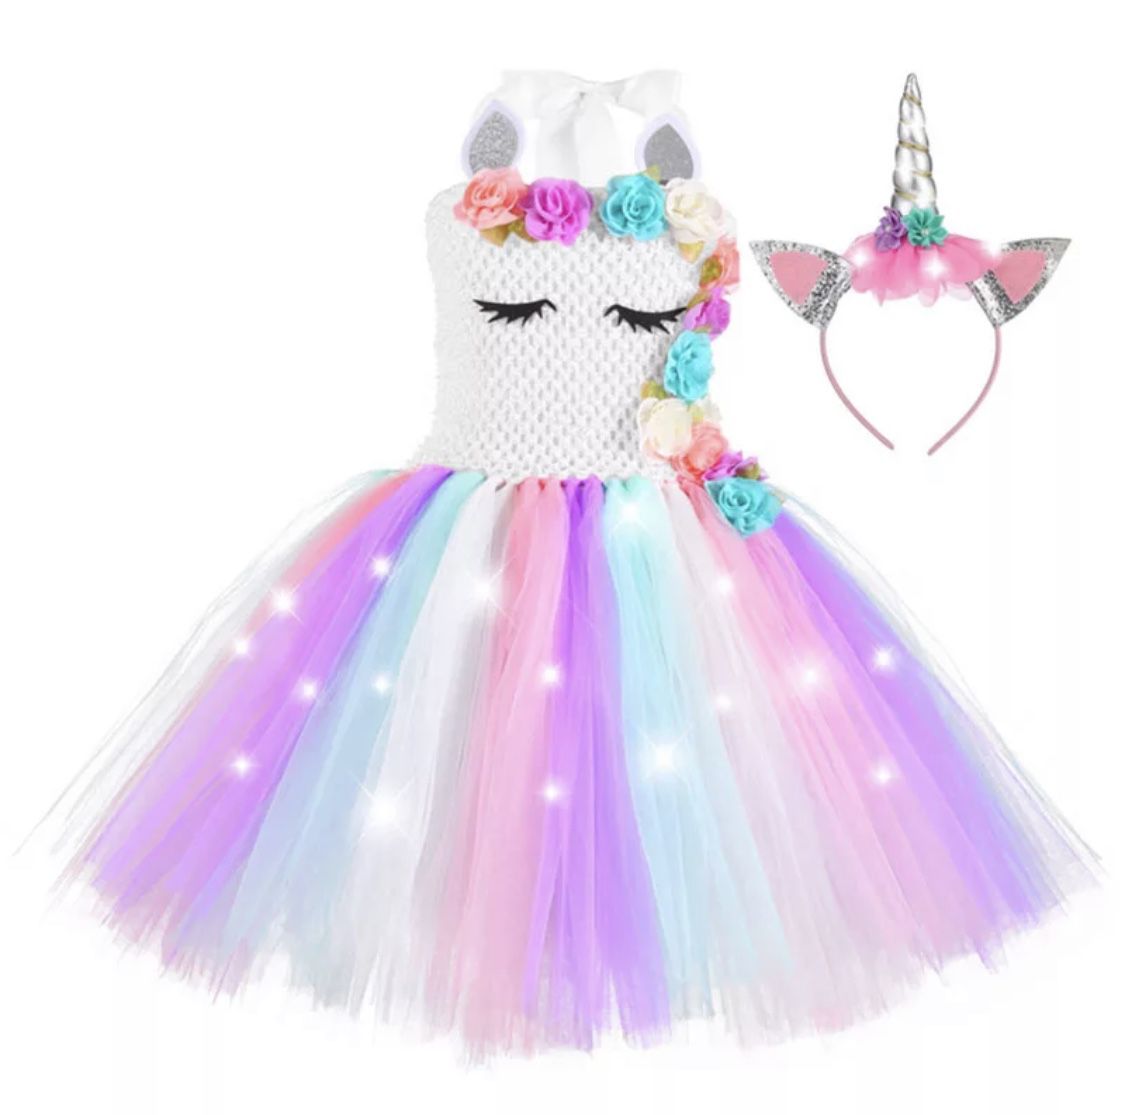 Brand New, Super cool lighted unicorn dress with lighted unicorn headband 🦄